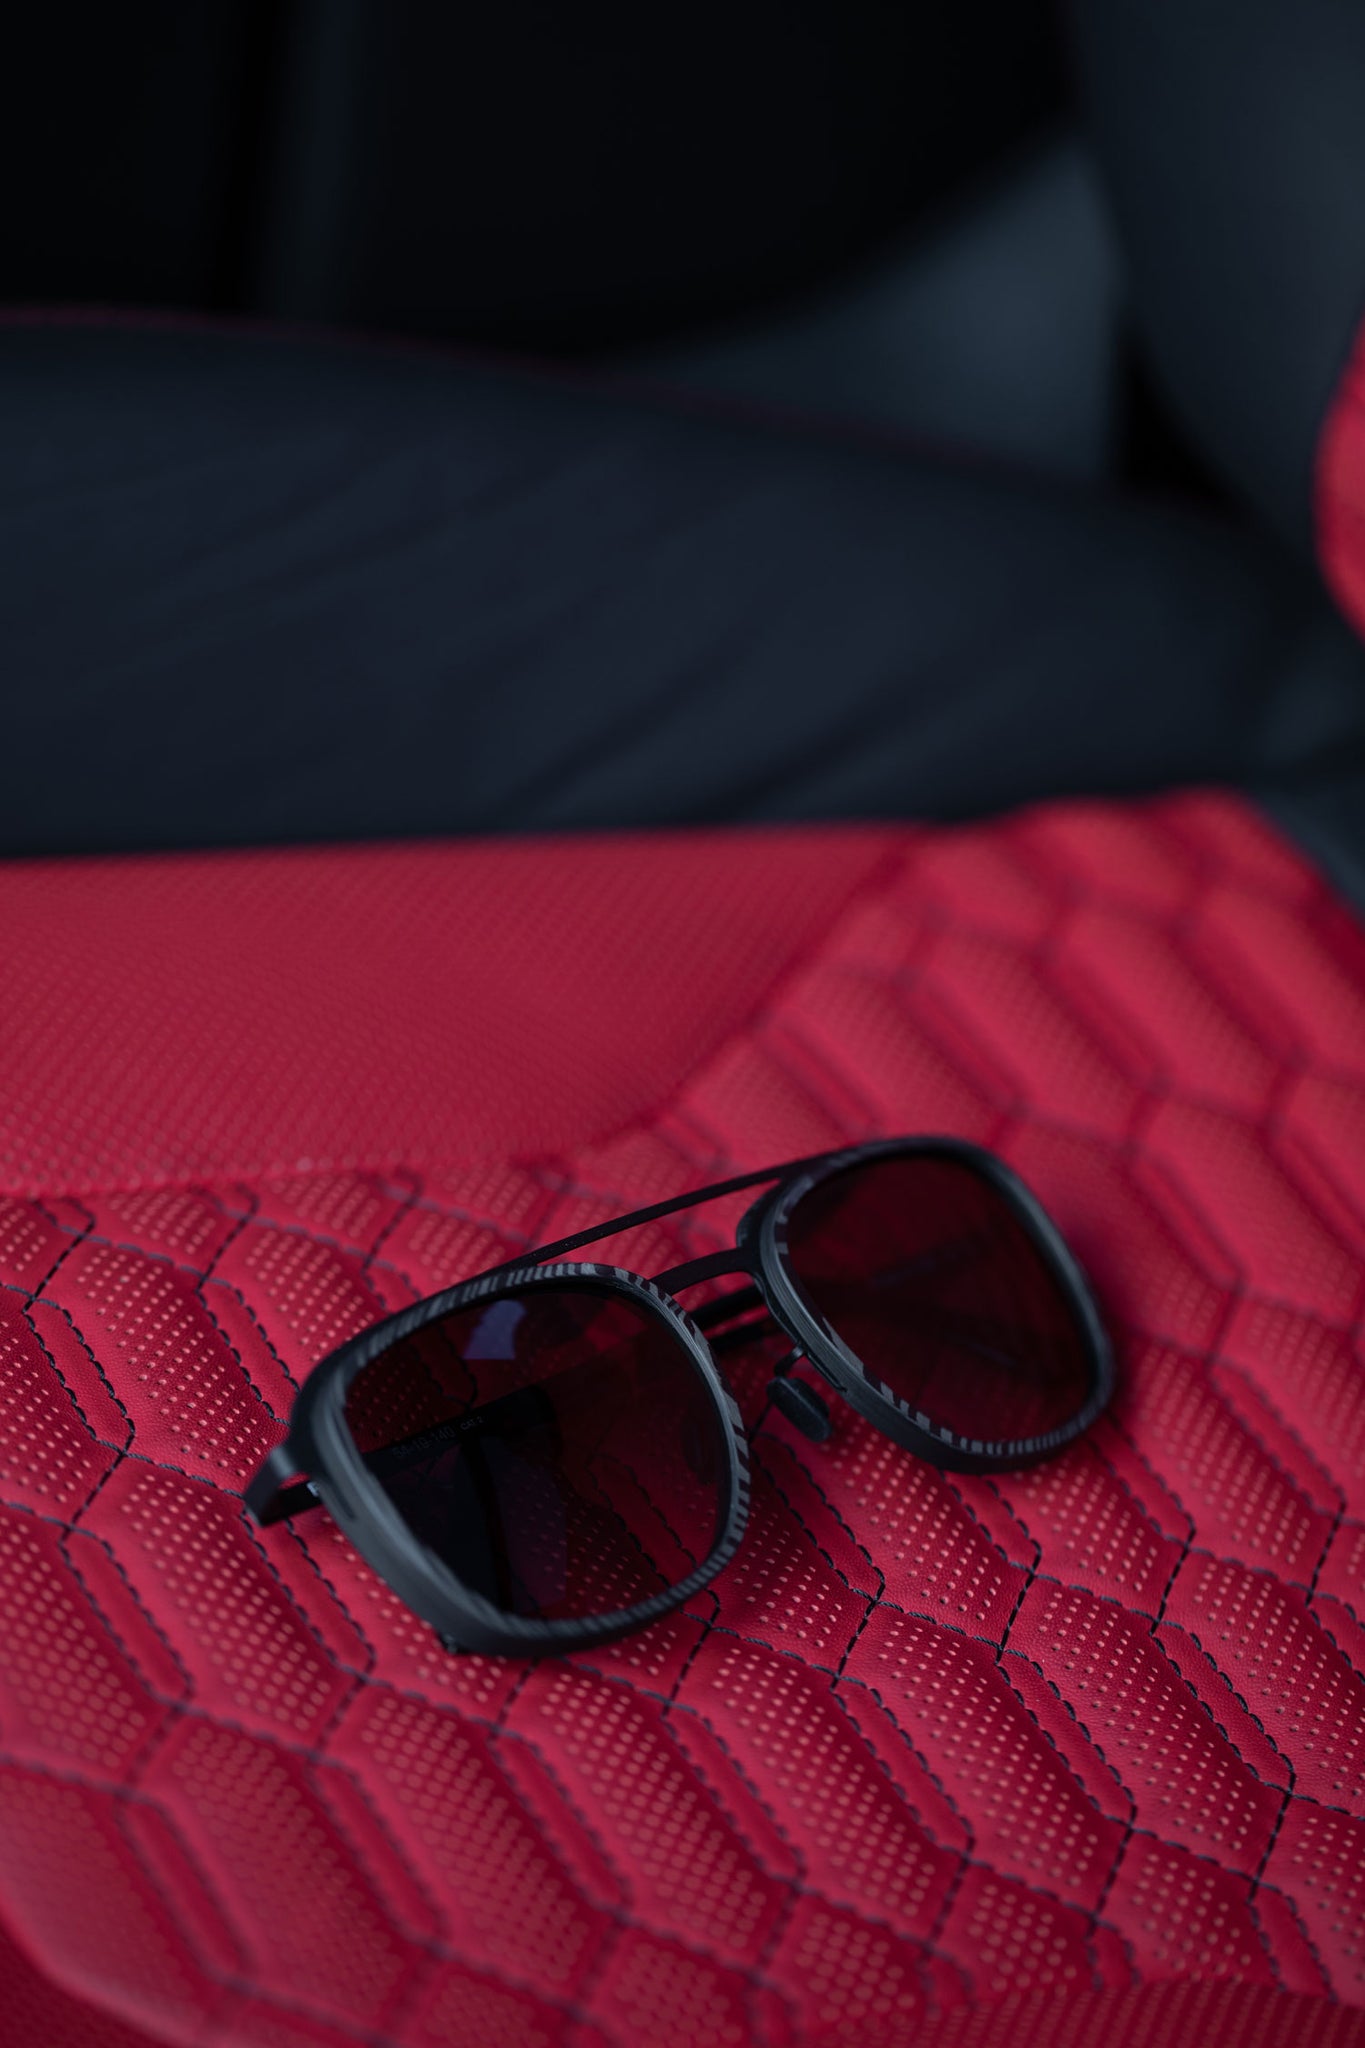 Roveri Eyewear RV018B aviators carbon fiber sunglasses on Lamborghini Urus leather seat.